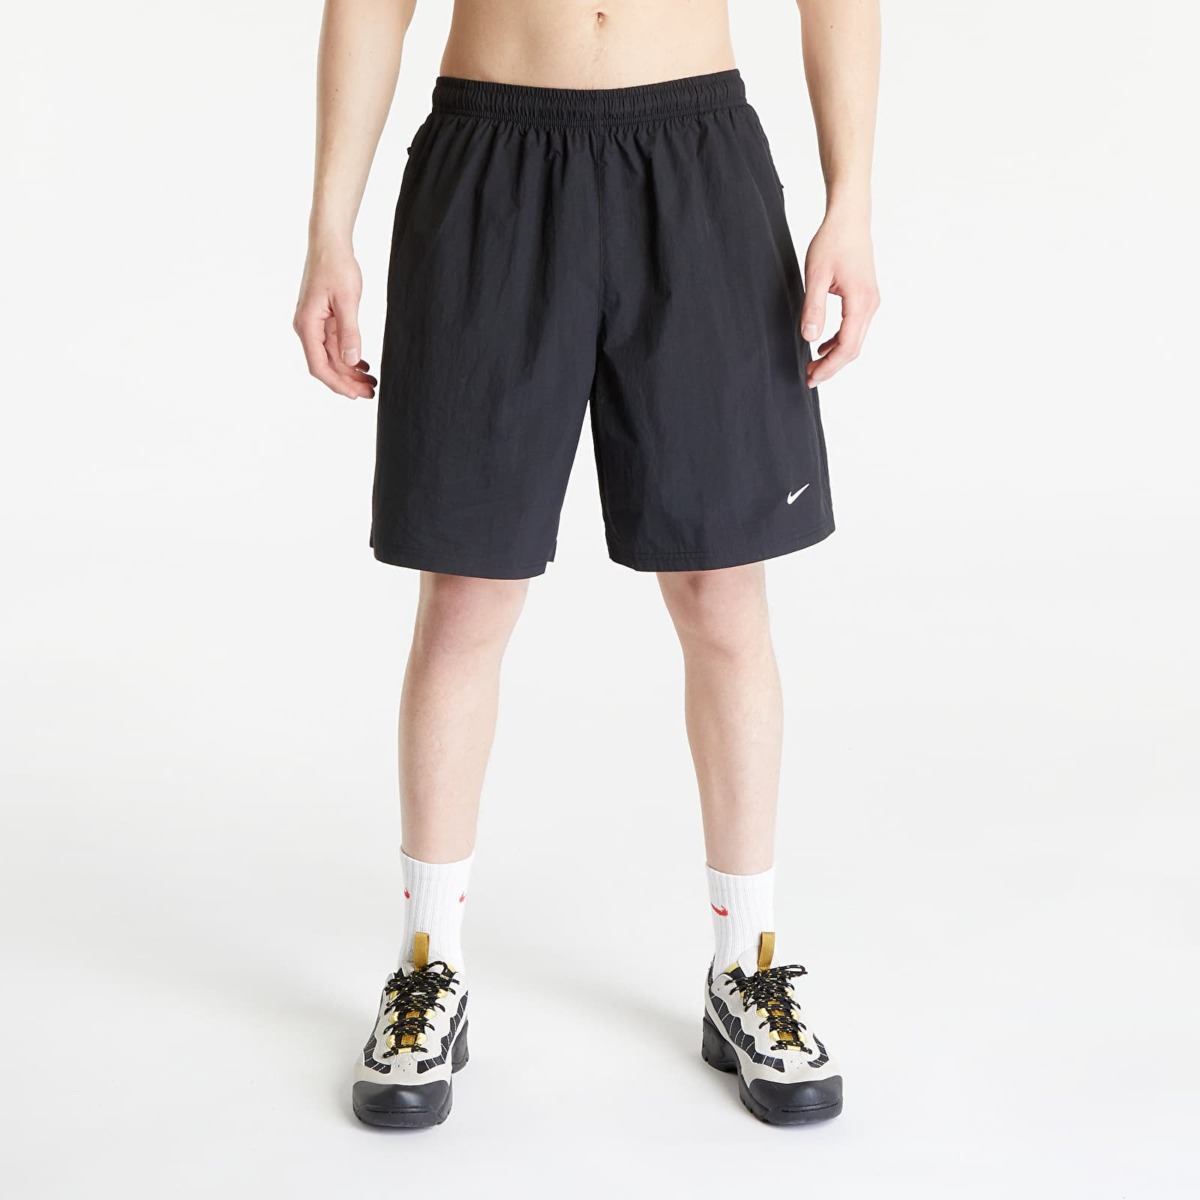 Nike - Black Shorts at Footshop GOOFASH